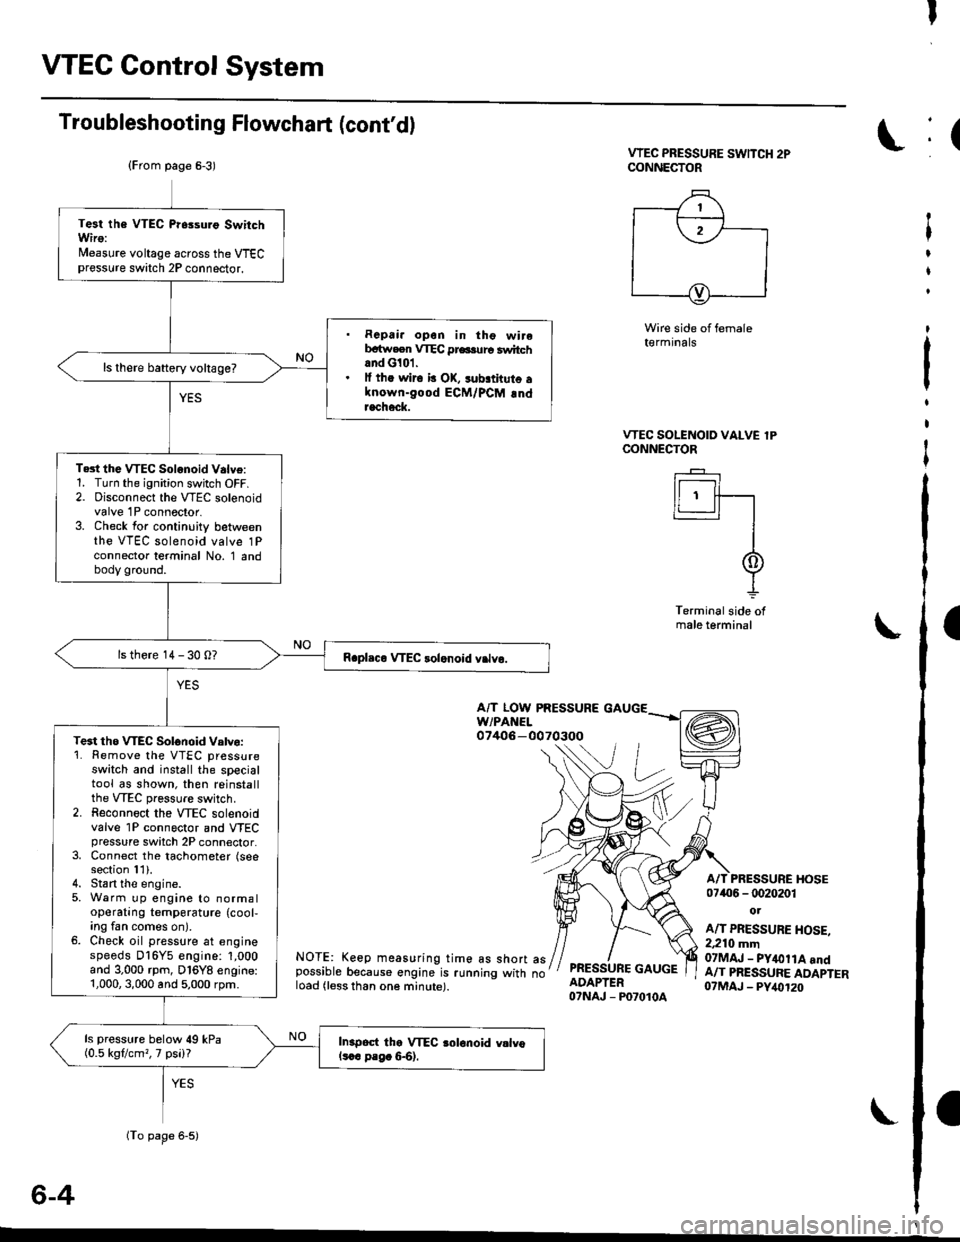 HONDA CIVIC 1996 6.G Workshop Manual I
VTEC Control System
Troubleshooting Flowchart (contd)
VTEC PRESSURE SwlTCH 2PCONNECTOR
Wire side of female(€rmrnats
VTEC SOLENOID VALVE lPCONNECTOR
I r----t I
ll  ff---r�-�1
I
I
-L
Terminal s